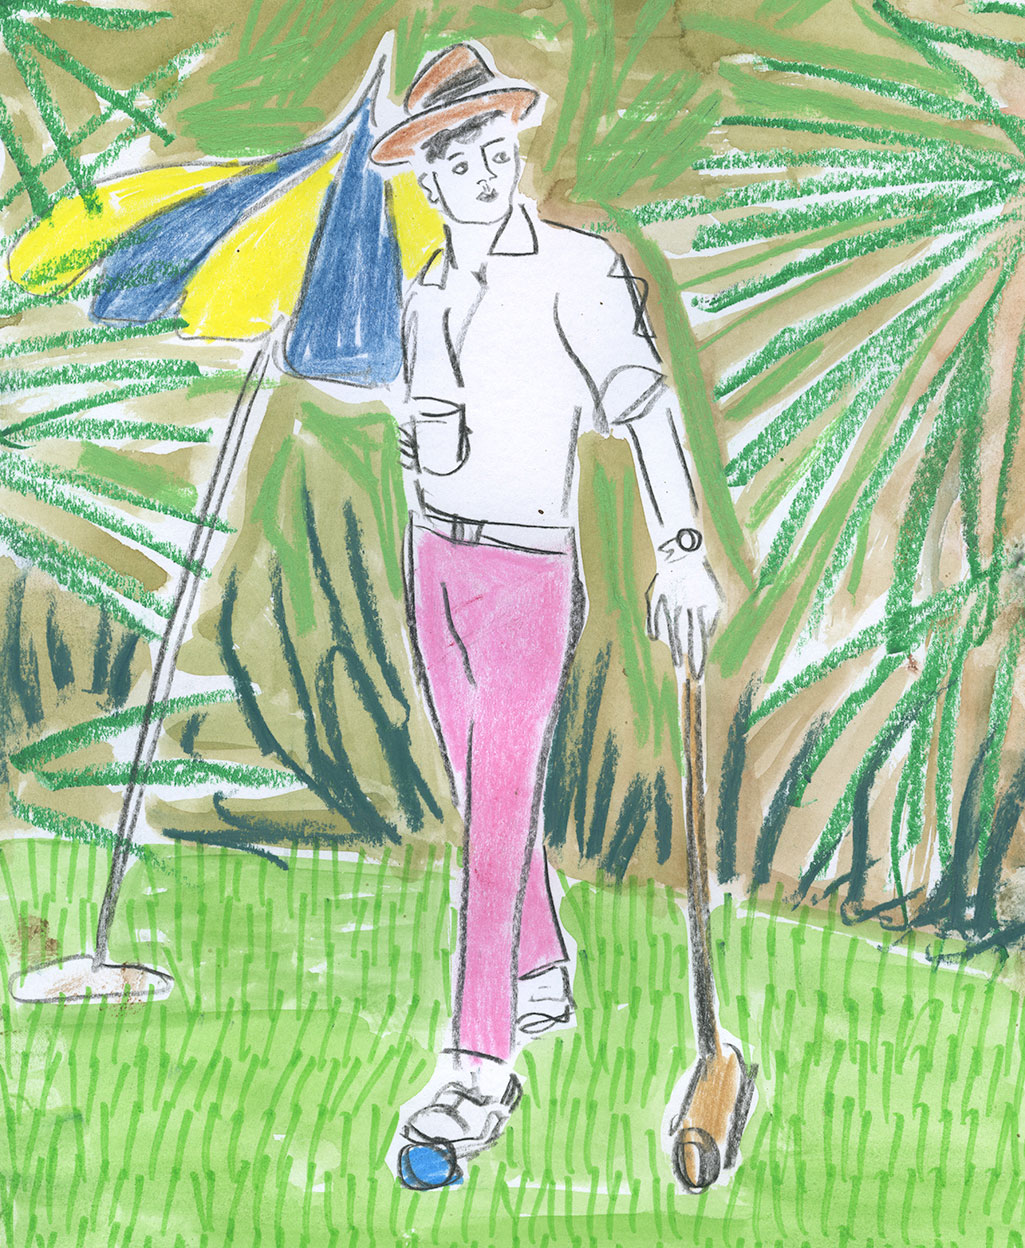 Croquet illustration